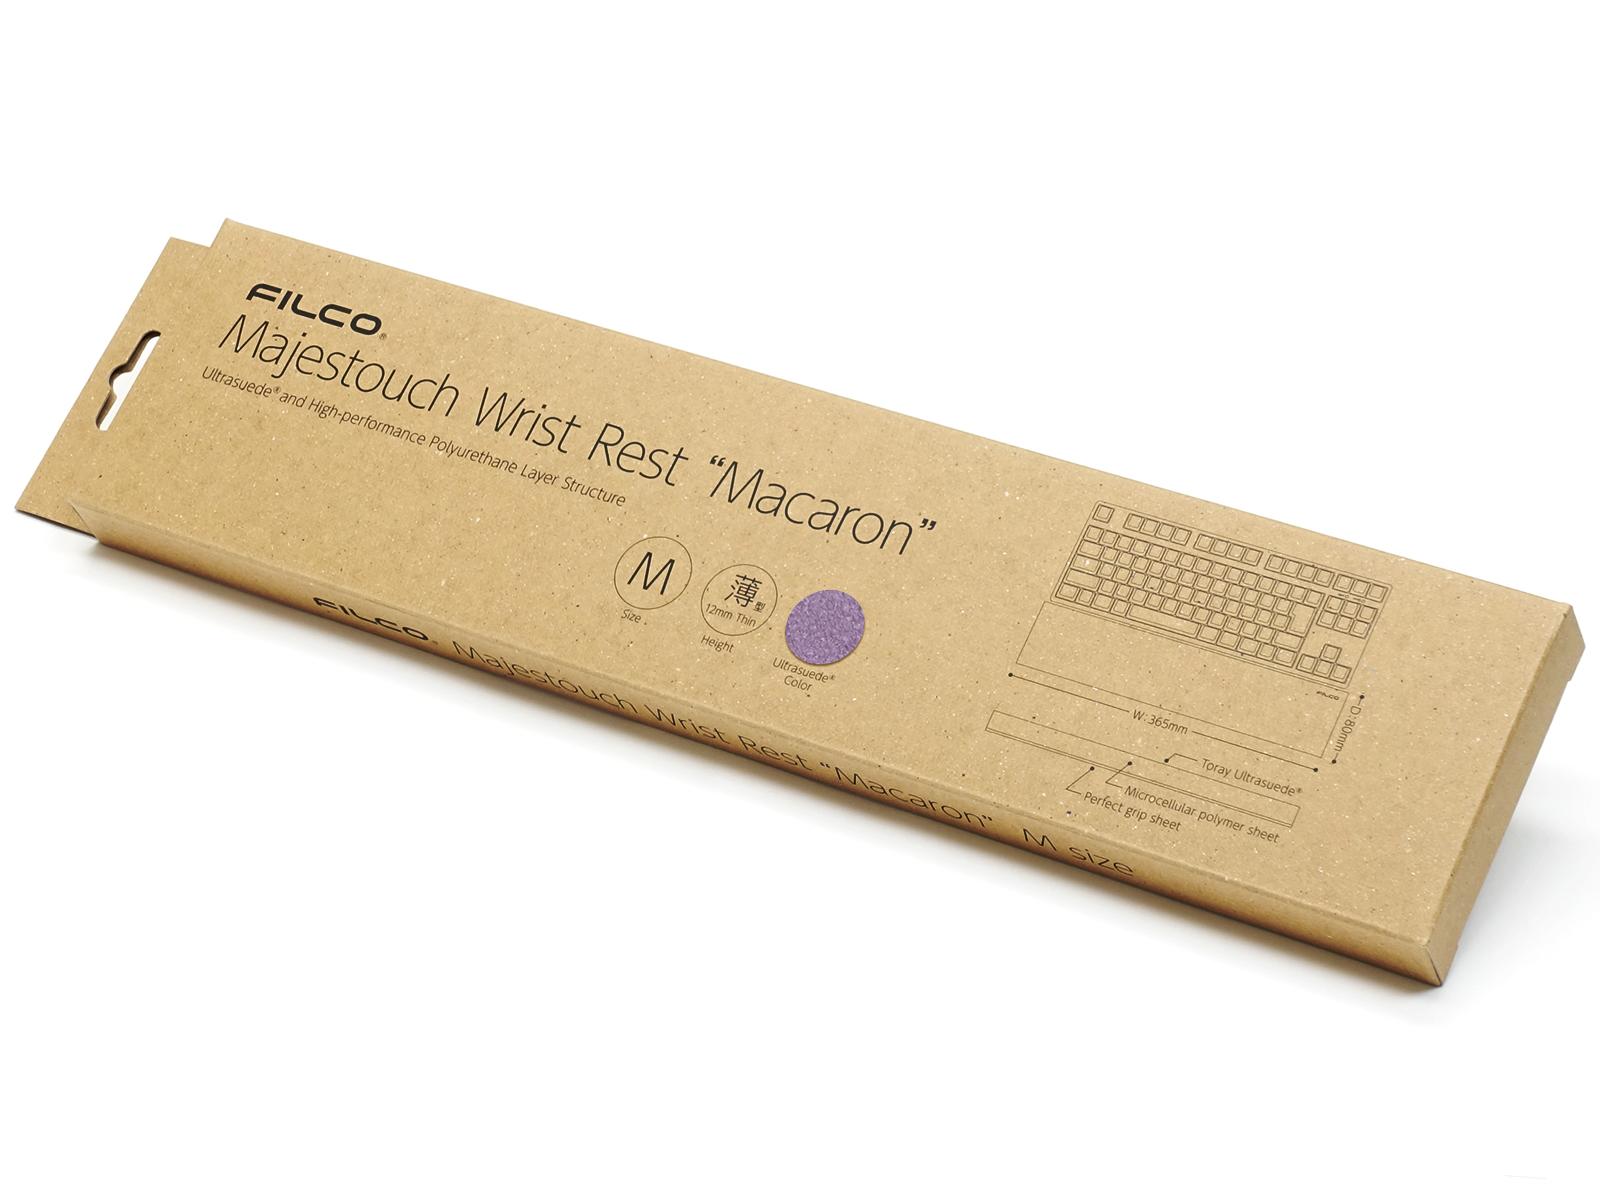 FILCO Majestouch Macaron Wrist Rest Lavender Medium (12mm) MKGHHITM78 |38213|